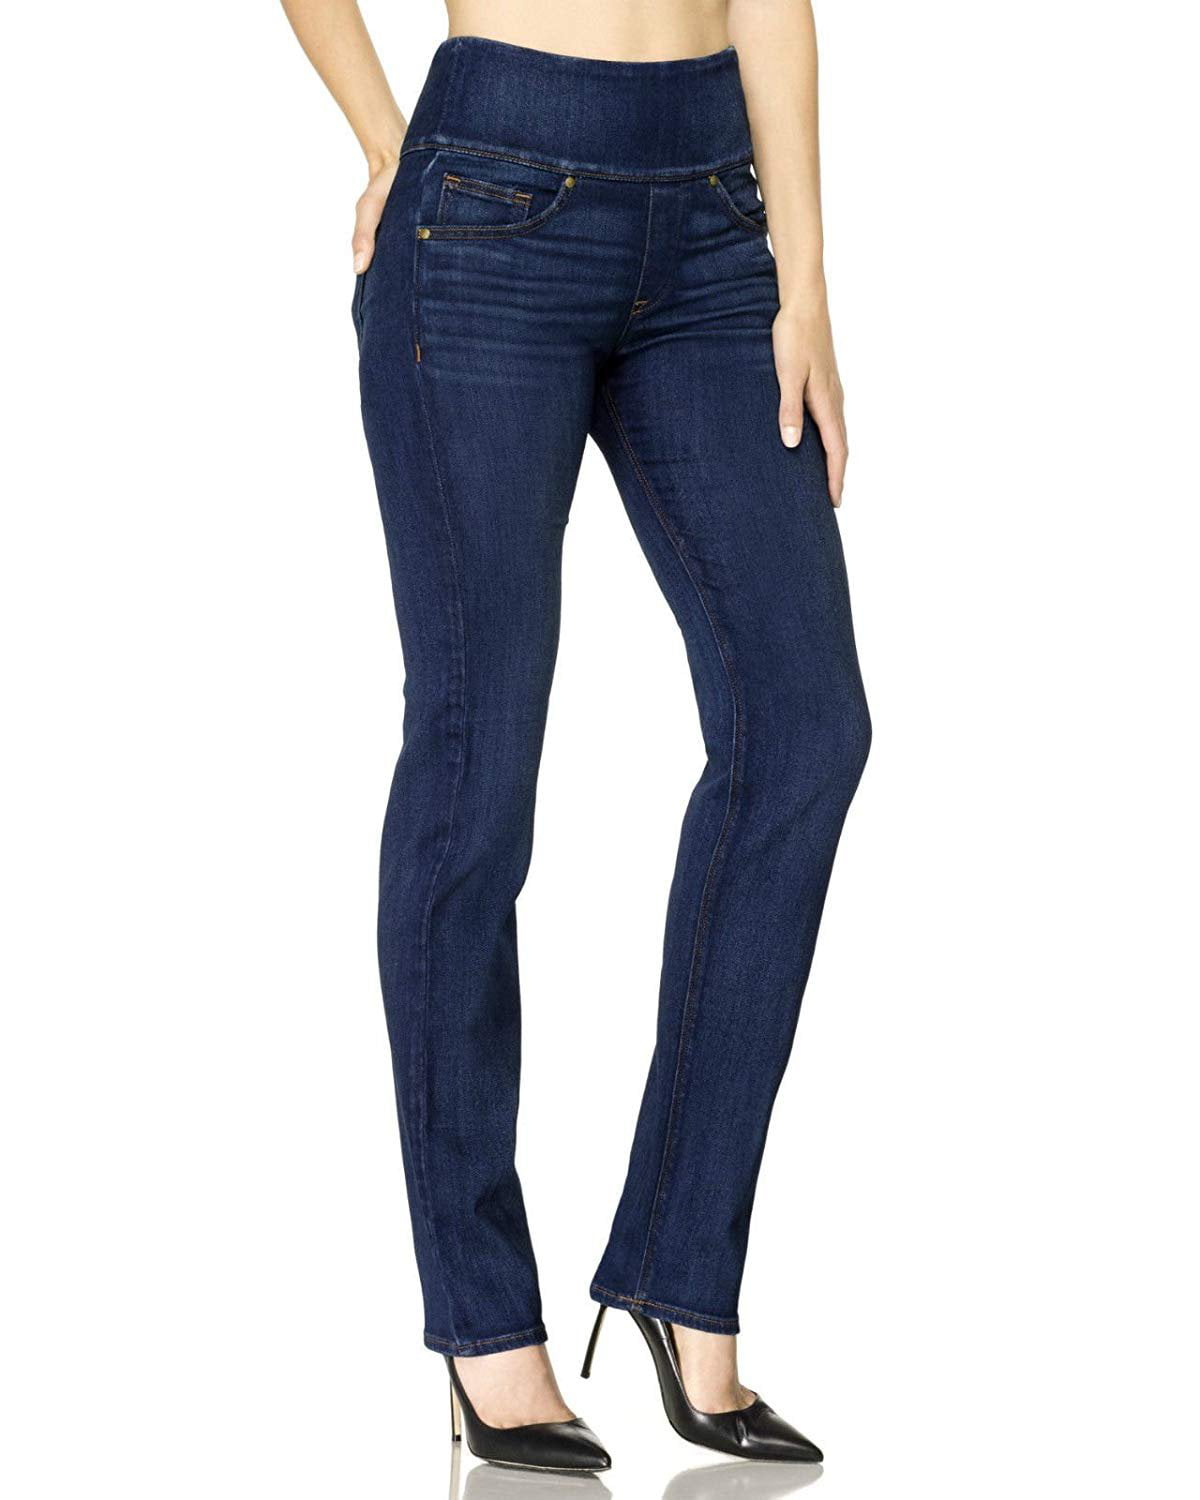 Spanx - SPANX The Signature Straight Jeans, Blue Wash, 26 - Walmart.com ...